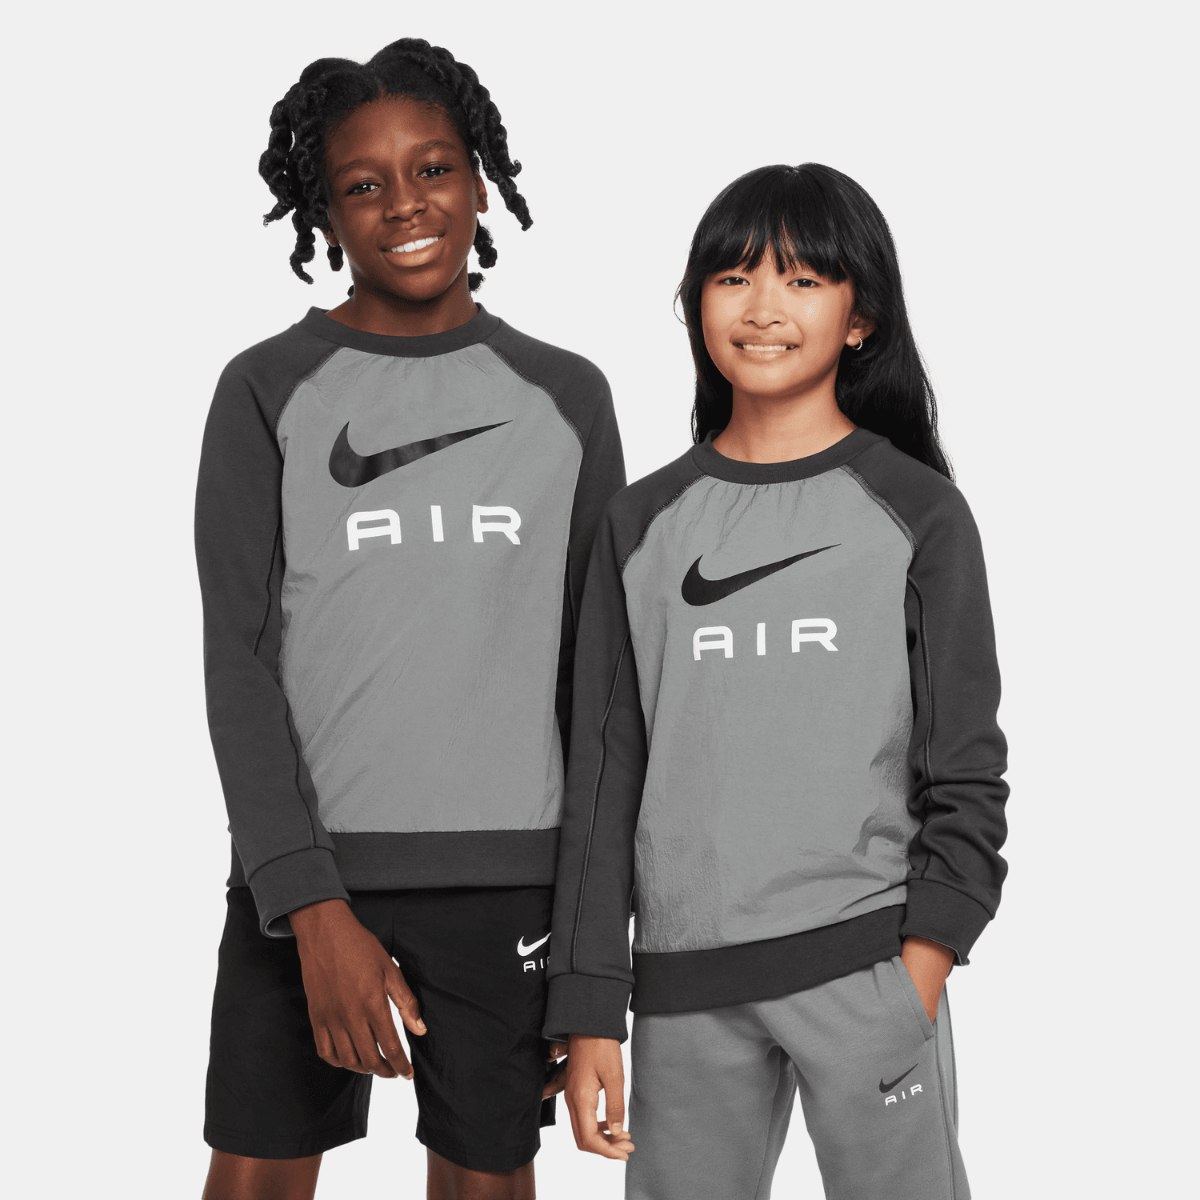 Nike Air Junior Sweatshirt - Grey/Black/White